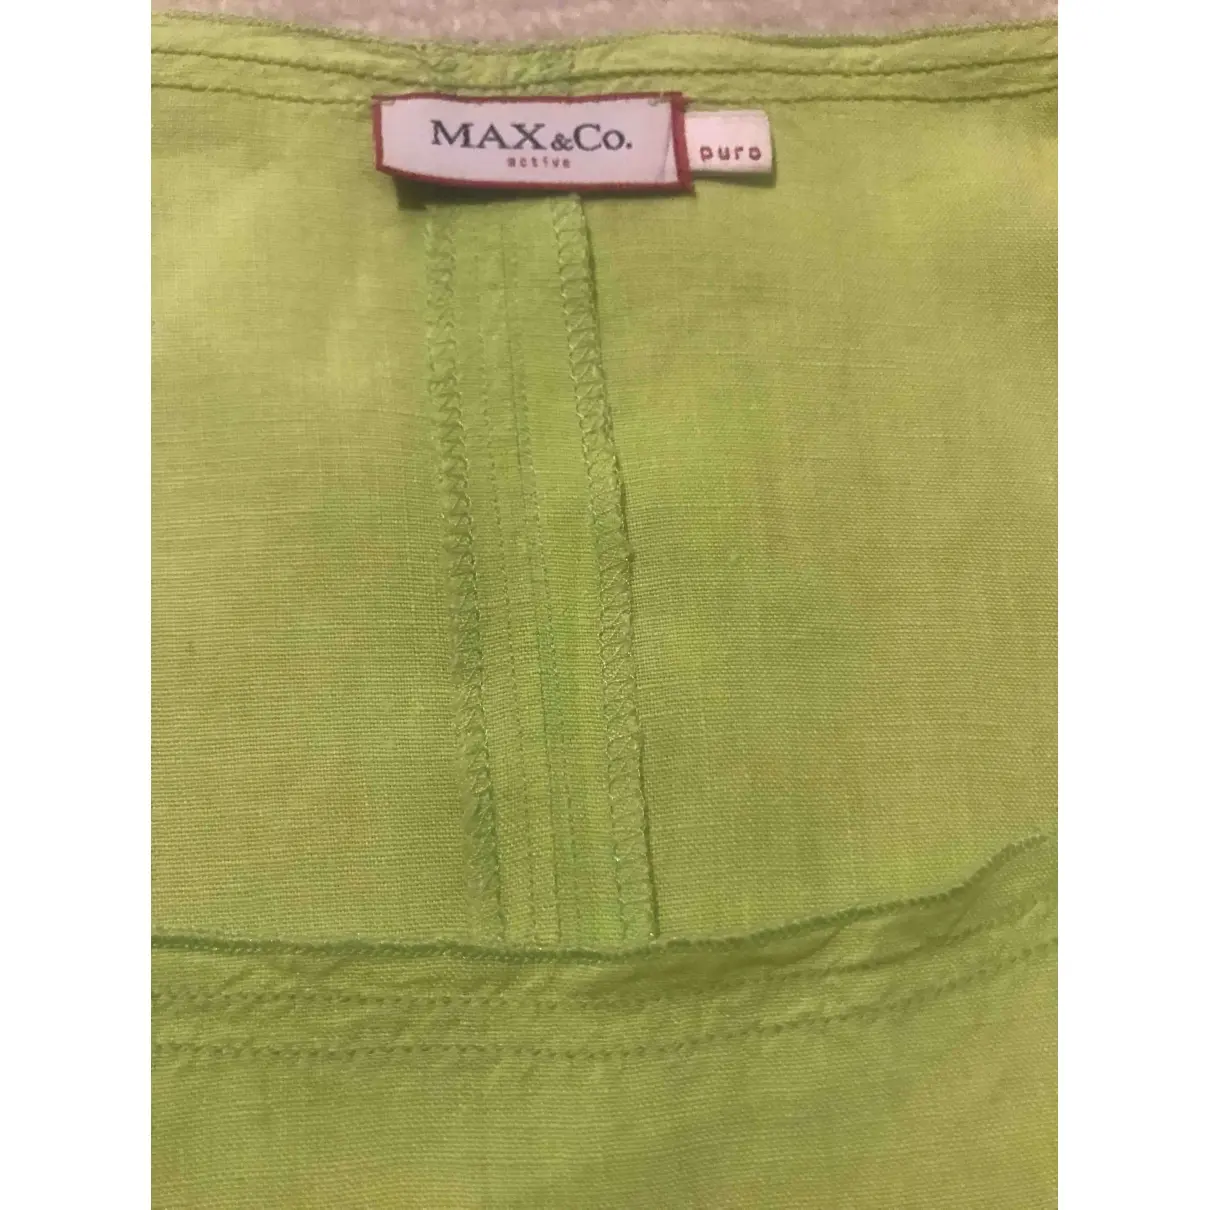 Max & Co Linen blouse for sale